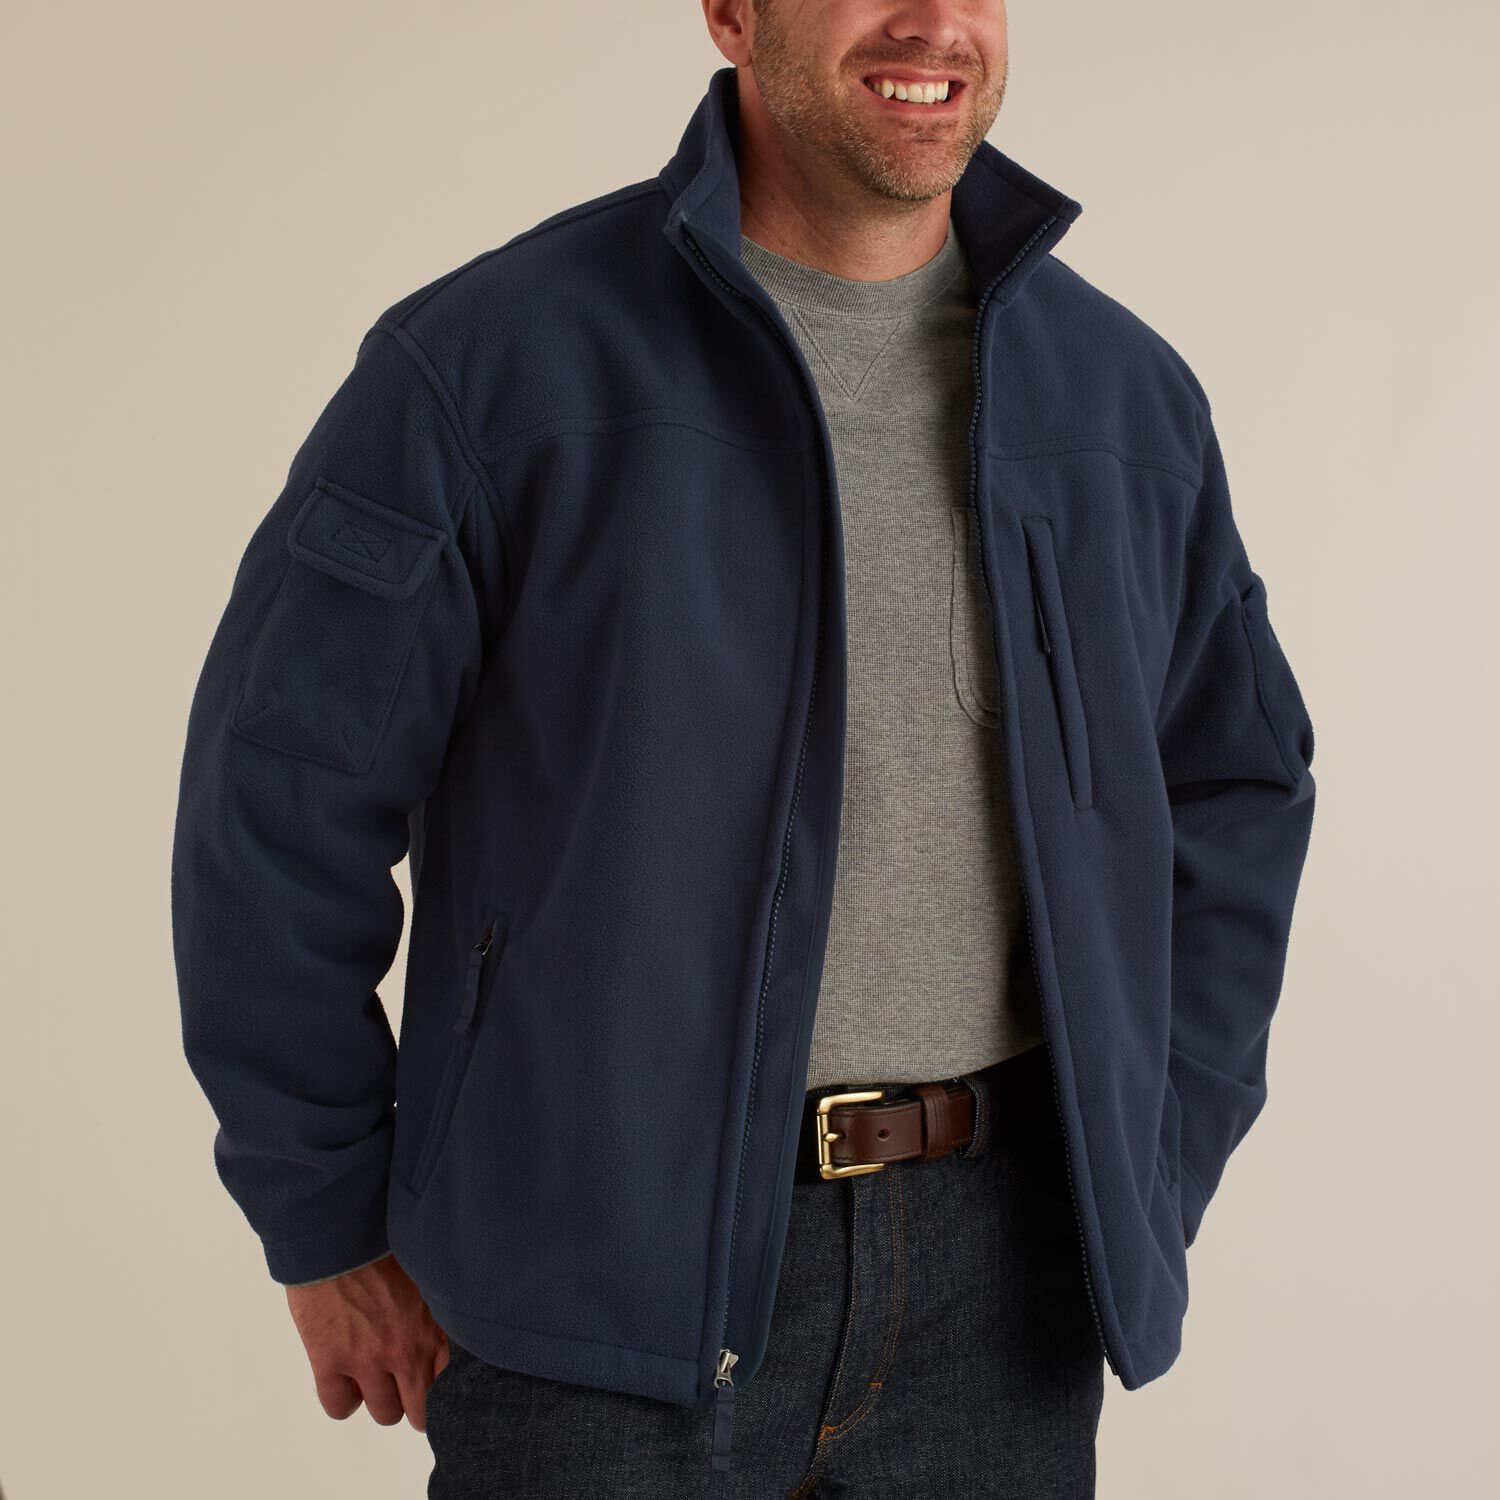 Duluth Trading Co Shoreman Mens Fleece Jacket SZ 2XLT Green Full Zip ...